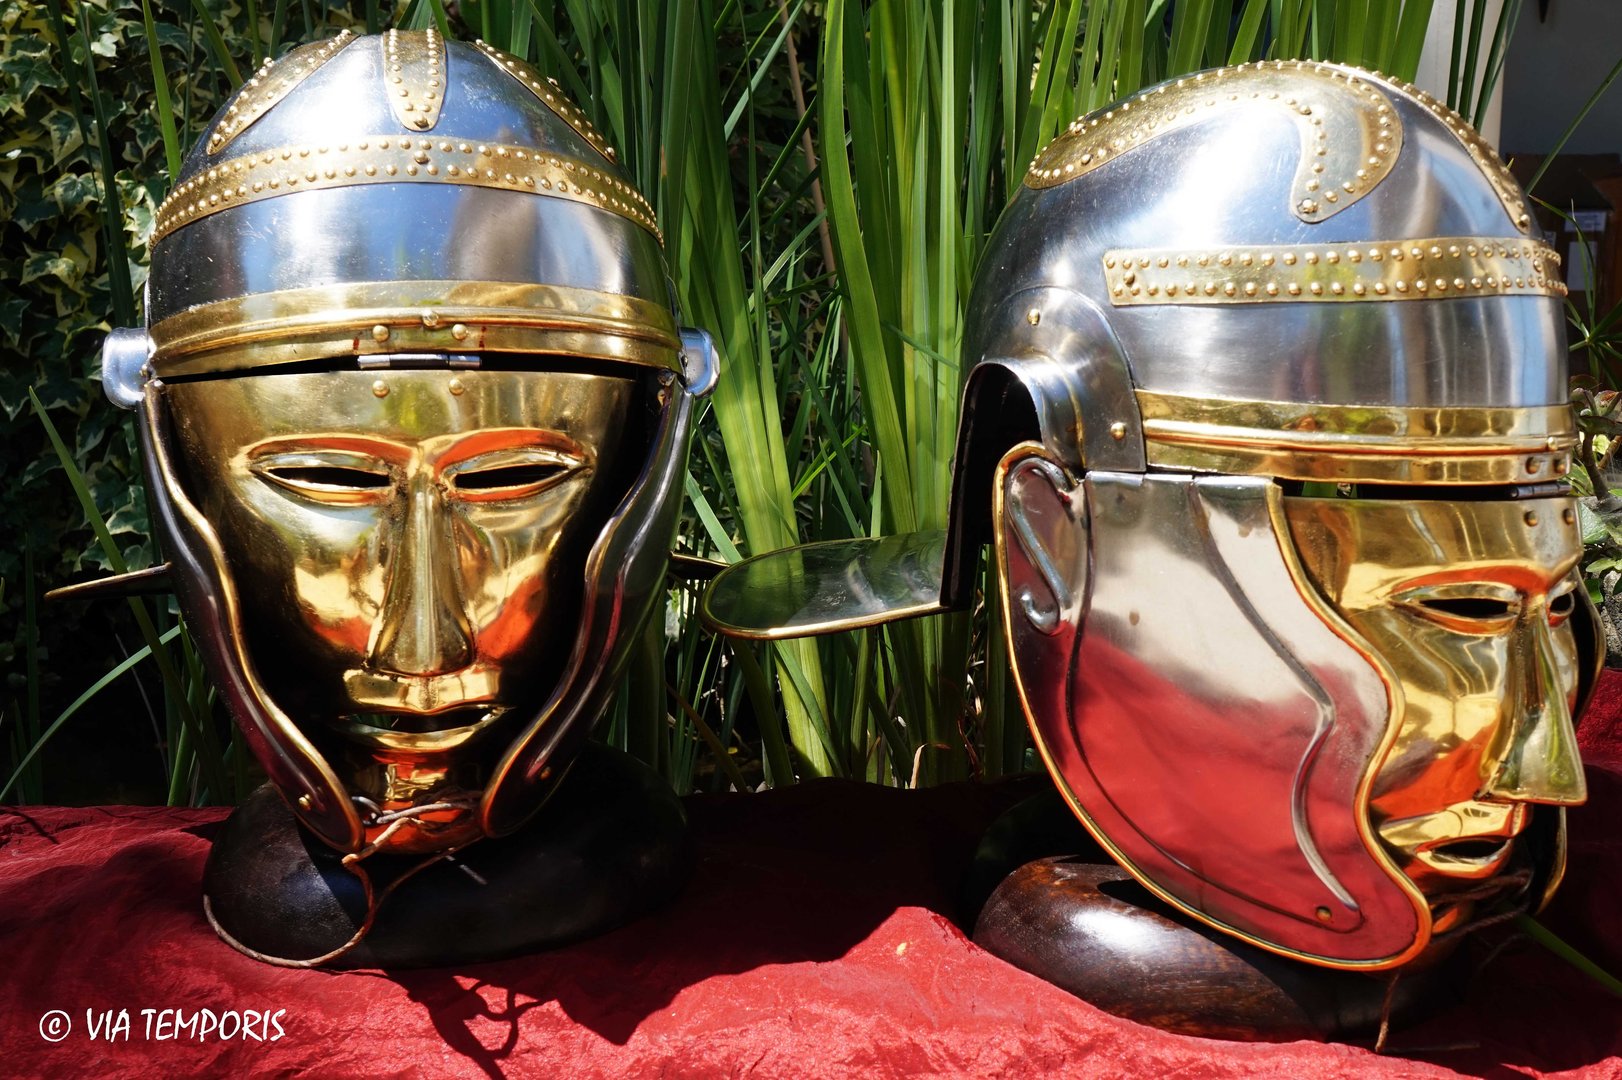 Ancient Medieval Roman Helmet With Face Mask/ Roman Gallic/Centurian Helmet II 